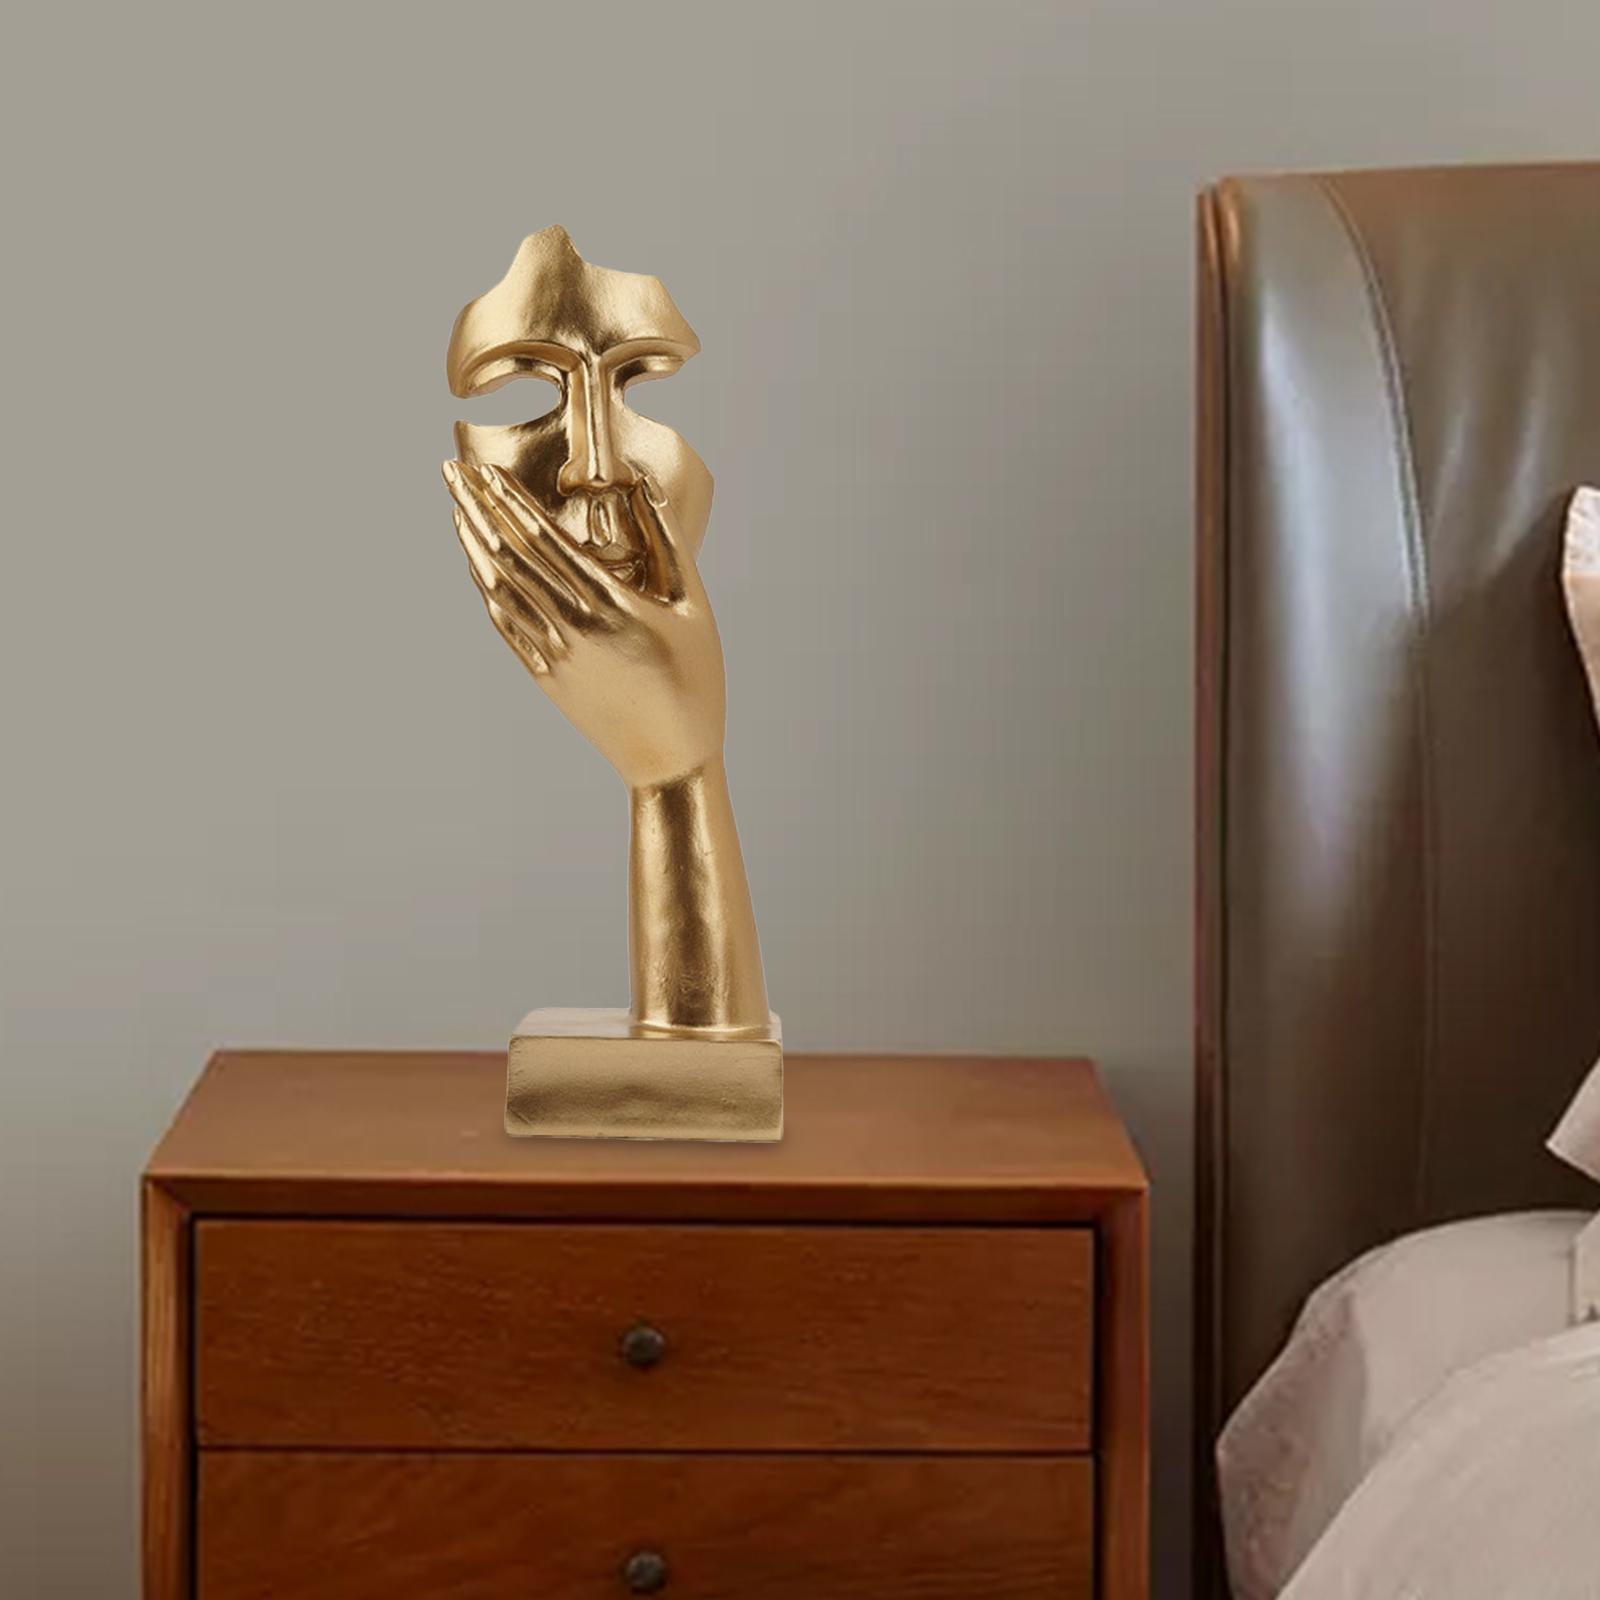 Women Face Art Statue Collectible Figurine for Mantelpiece Study Room Office Aureate